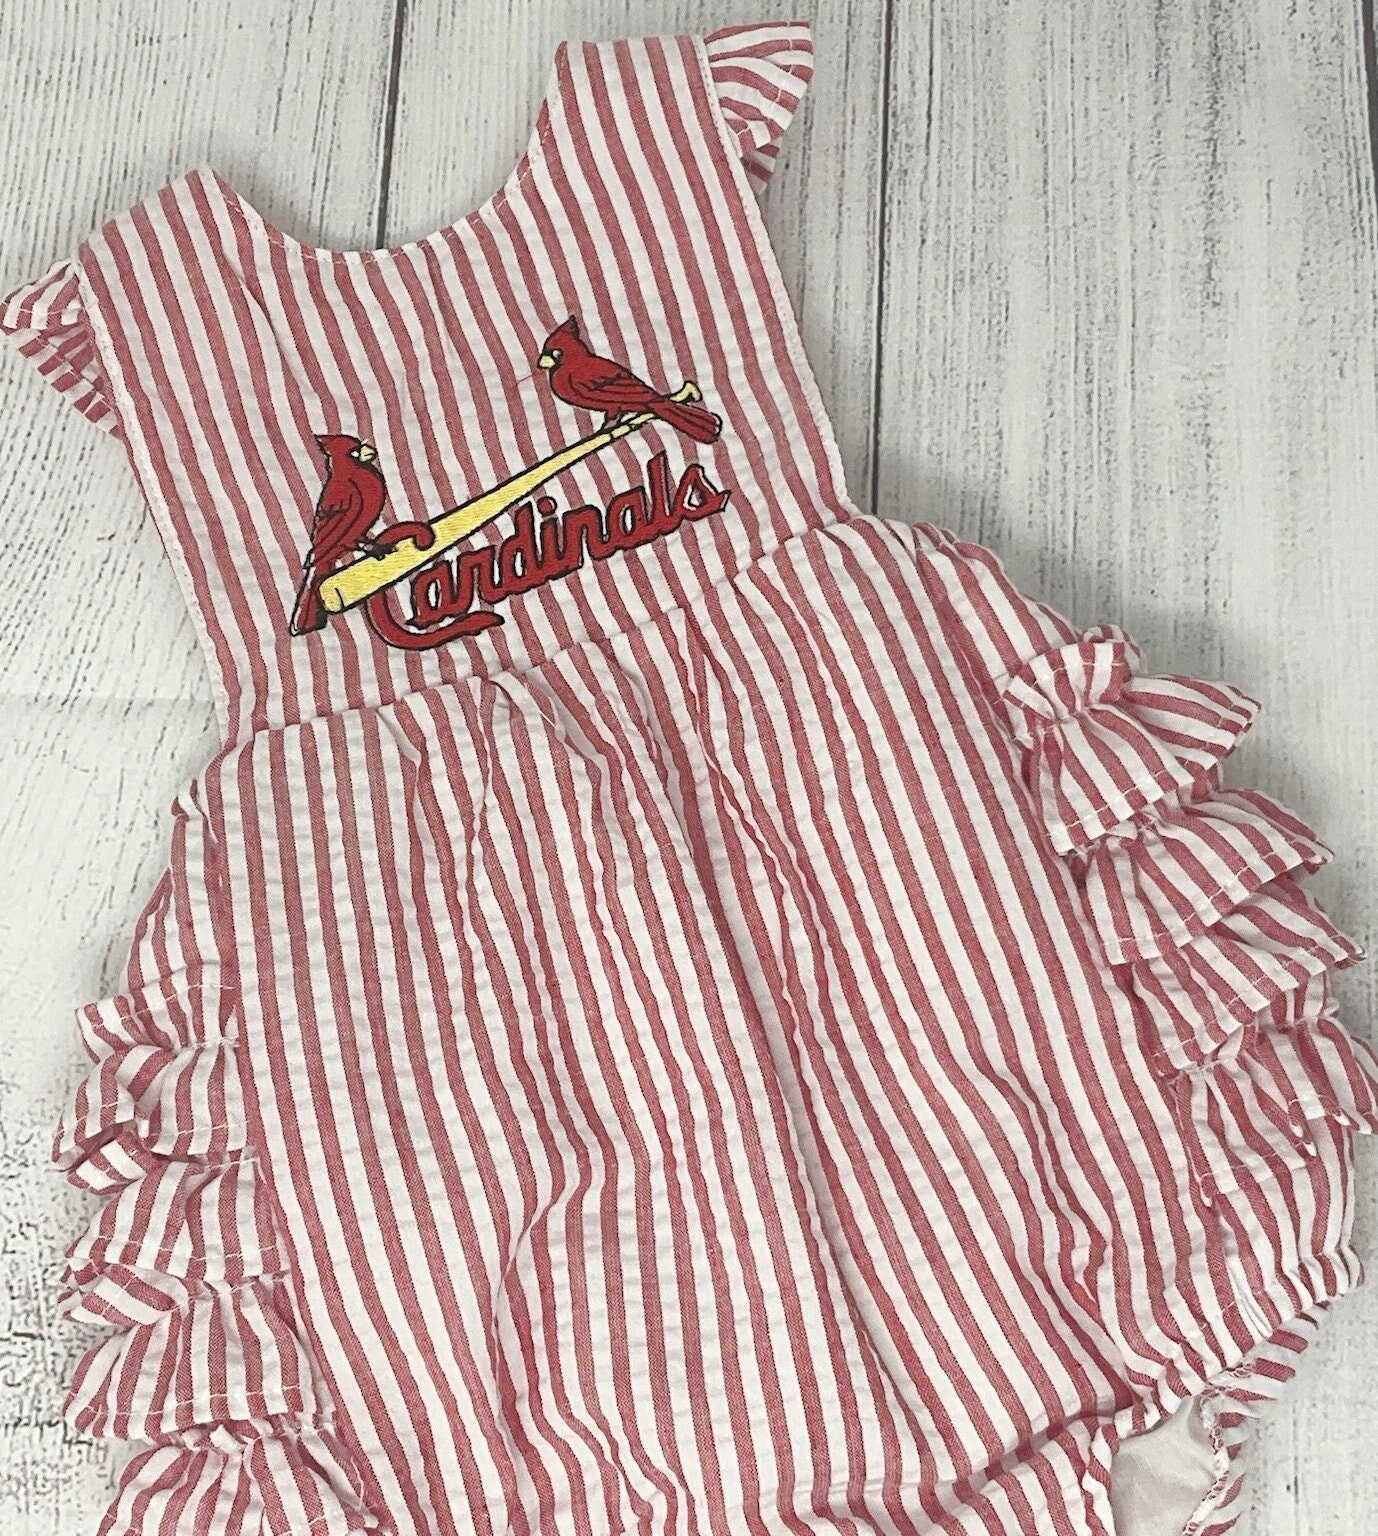 Girls Infant White/Red St. Louis Cardinals Sweet Spot Three-Piece Bodysuit Skirt & Booties Set